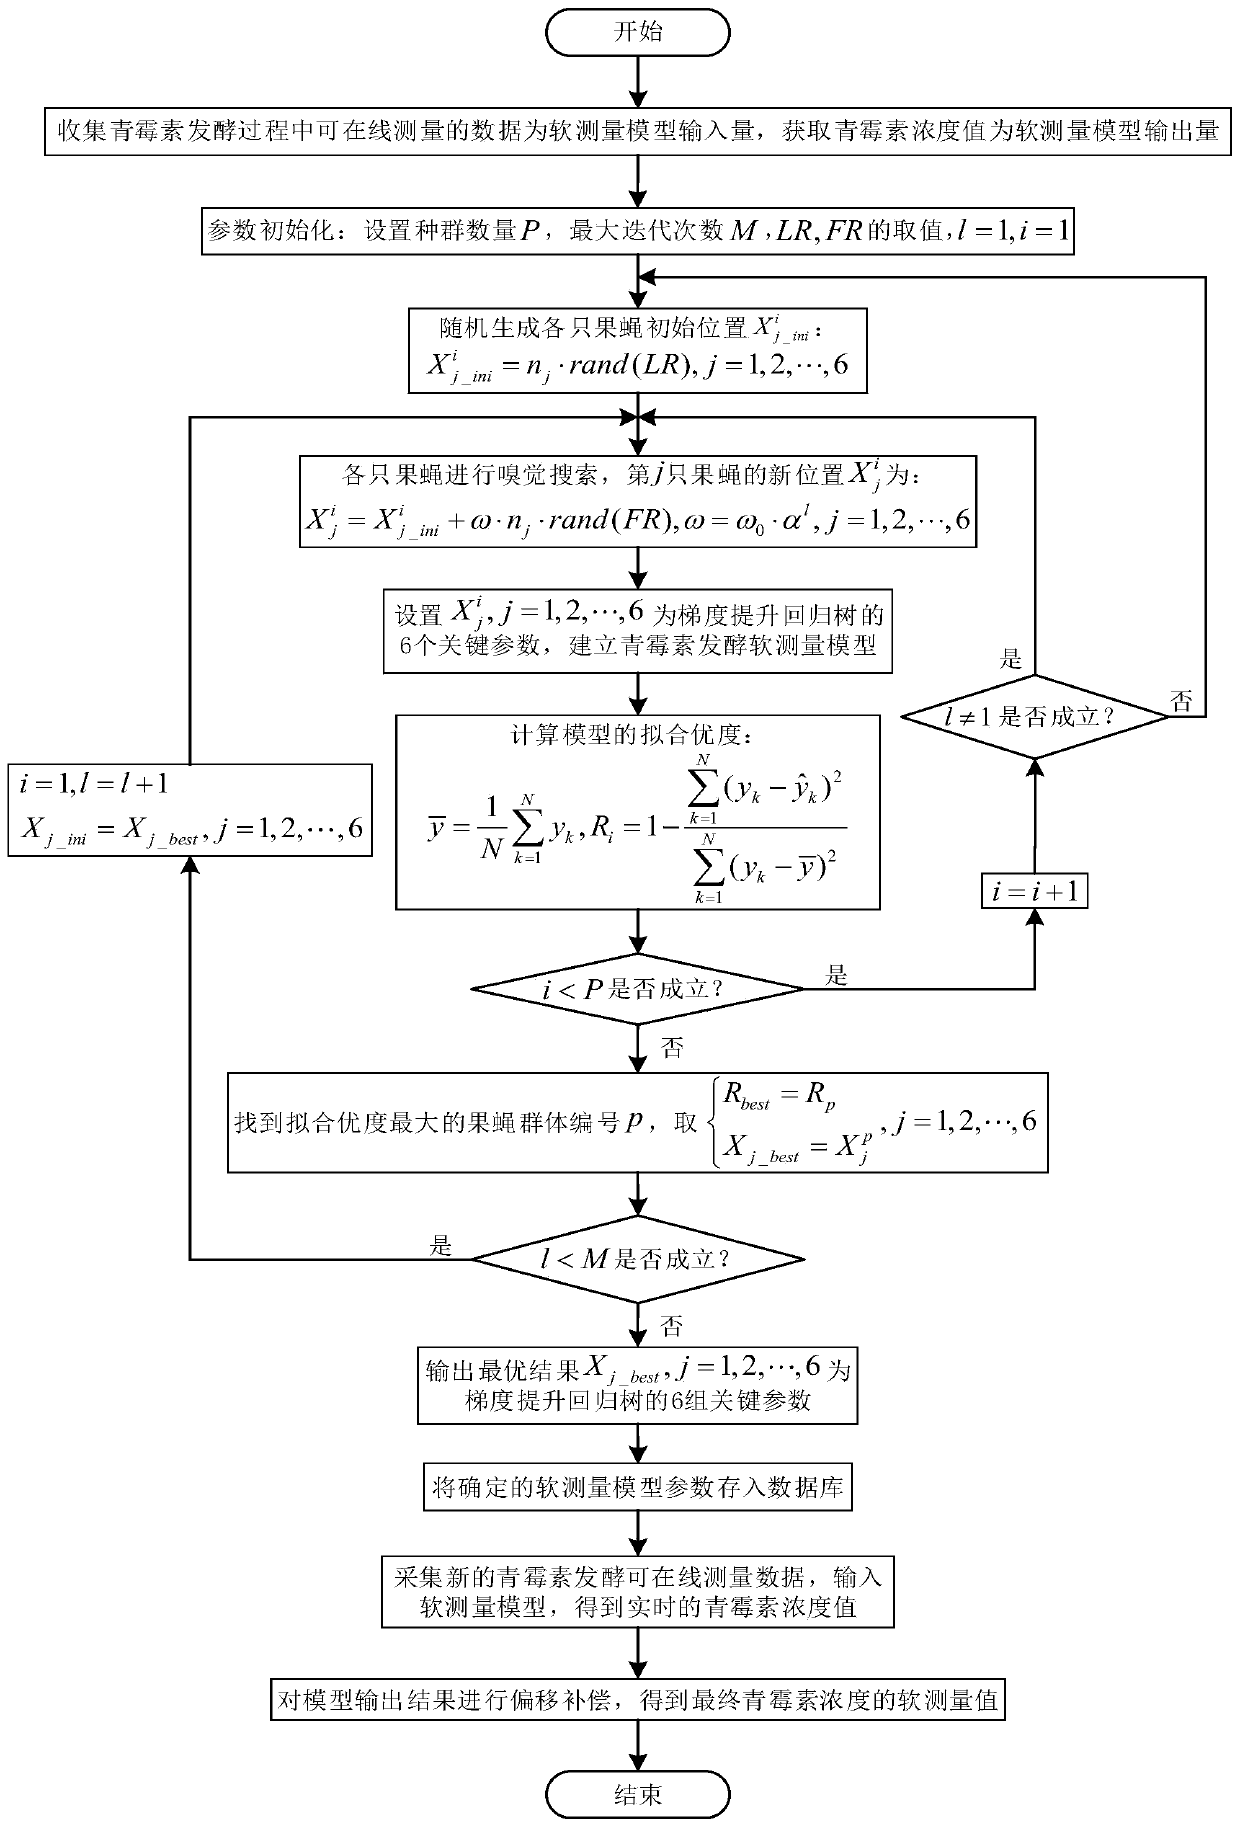 Penicillin fermentation process soft measurement modeling method for optimizing a gradient lifting regression tree based on a fruit fly algorithm